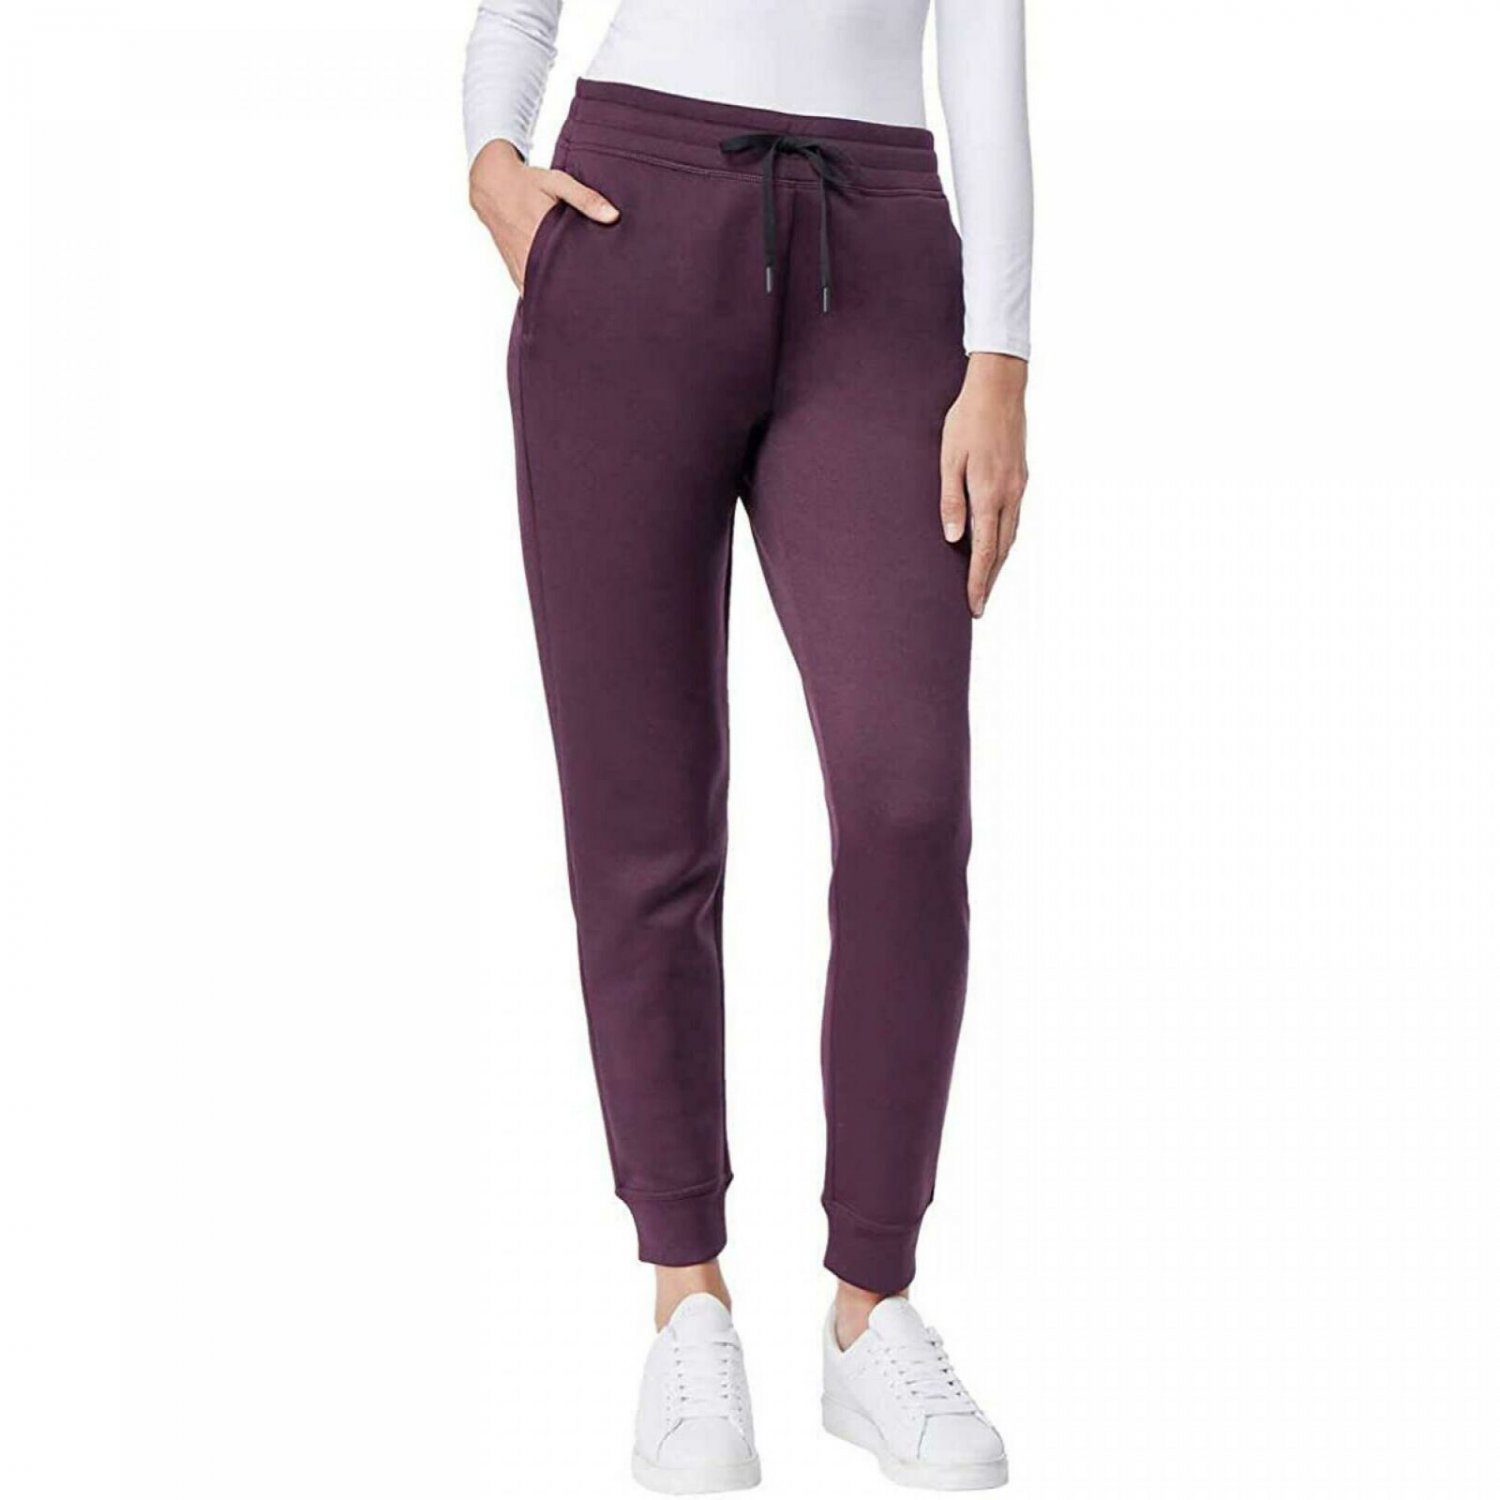 32 Degrees Heat Women's Tech Fleece Jogger Pants Large Potent Purple